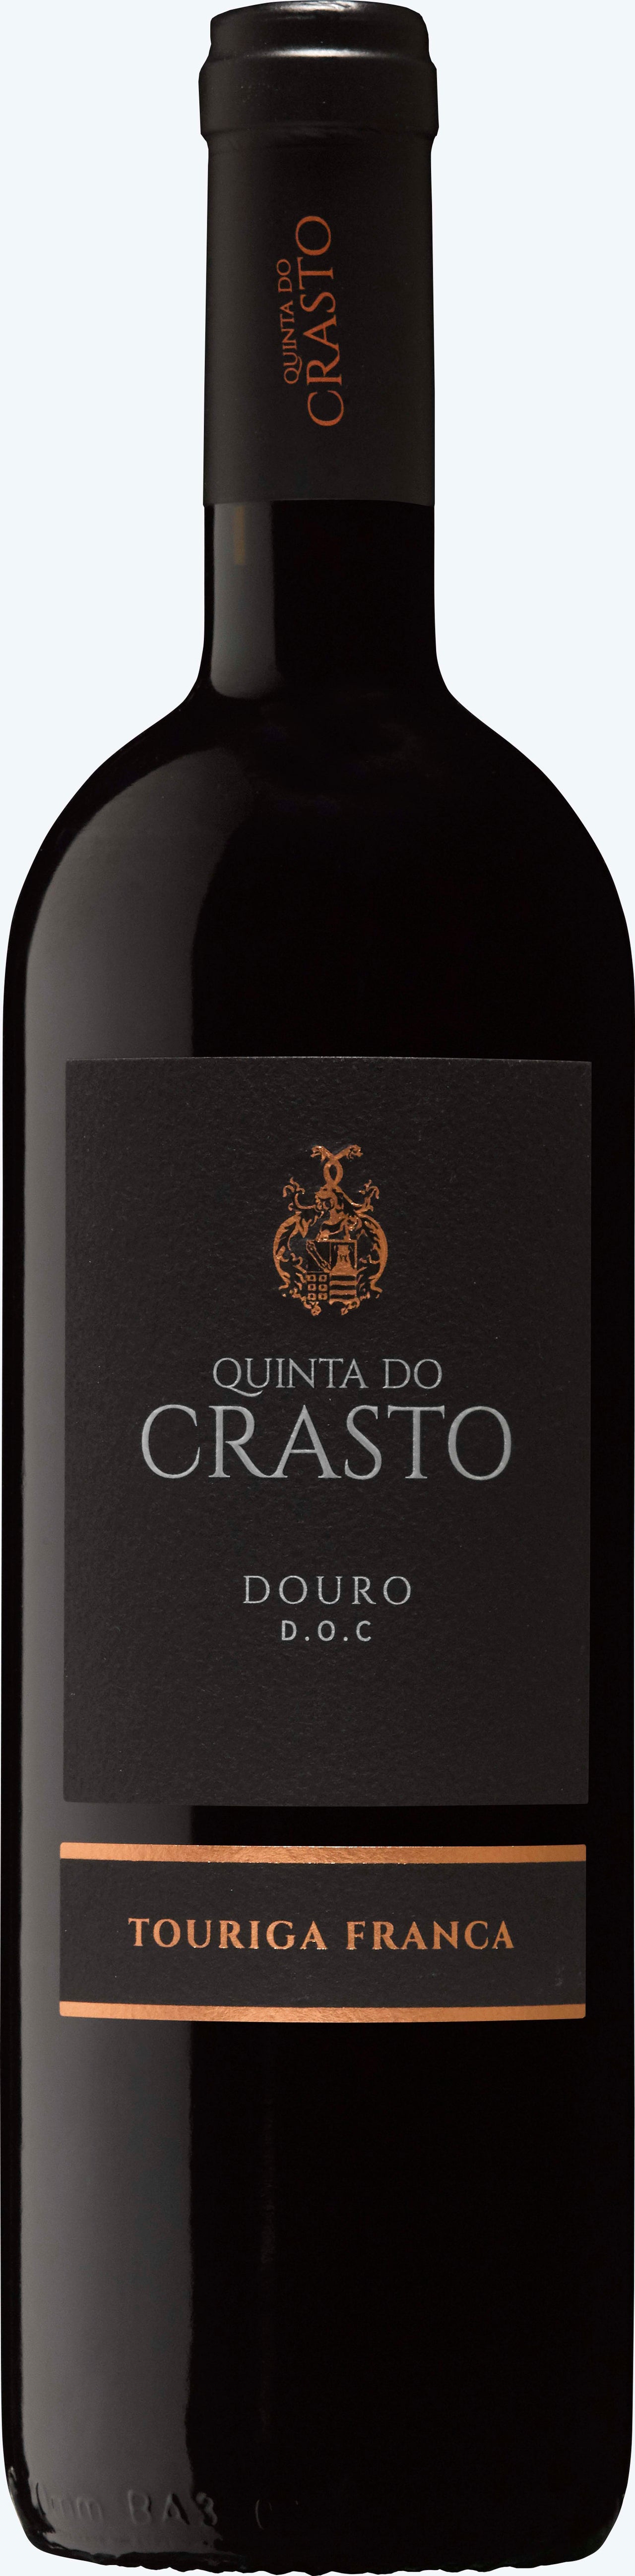 Quinta Do Crasto Touriga Franca 2018 75cl - Buy Quinta Do Crasto Wines from GREAT WINES DIRECT wine shop